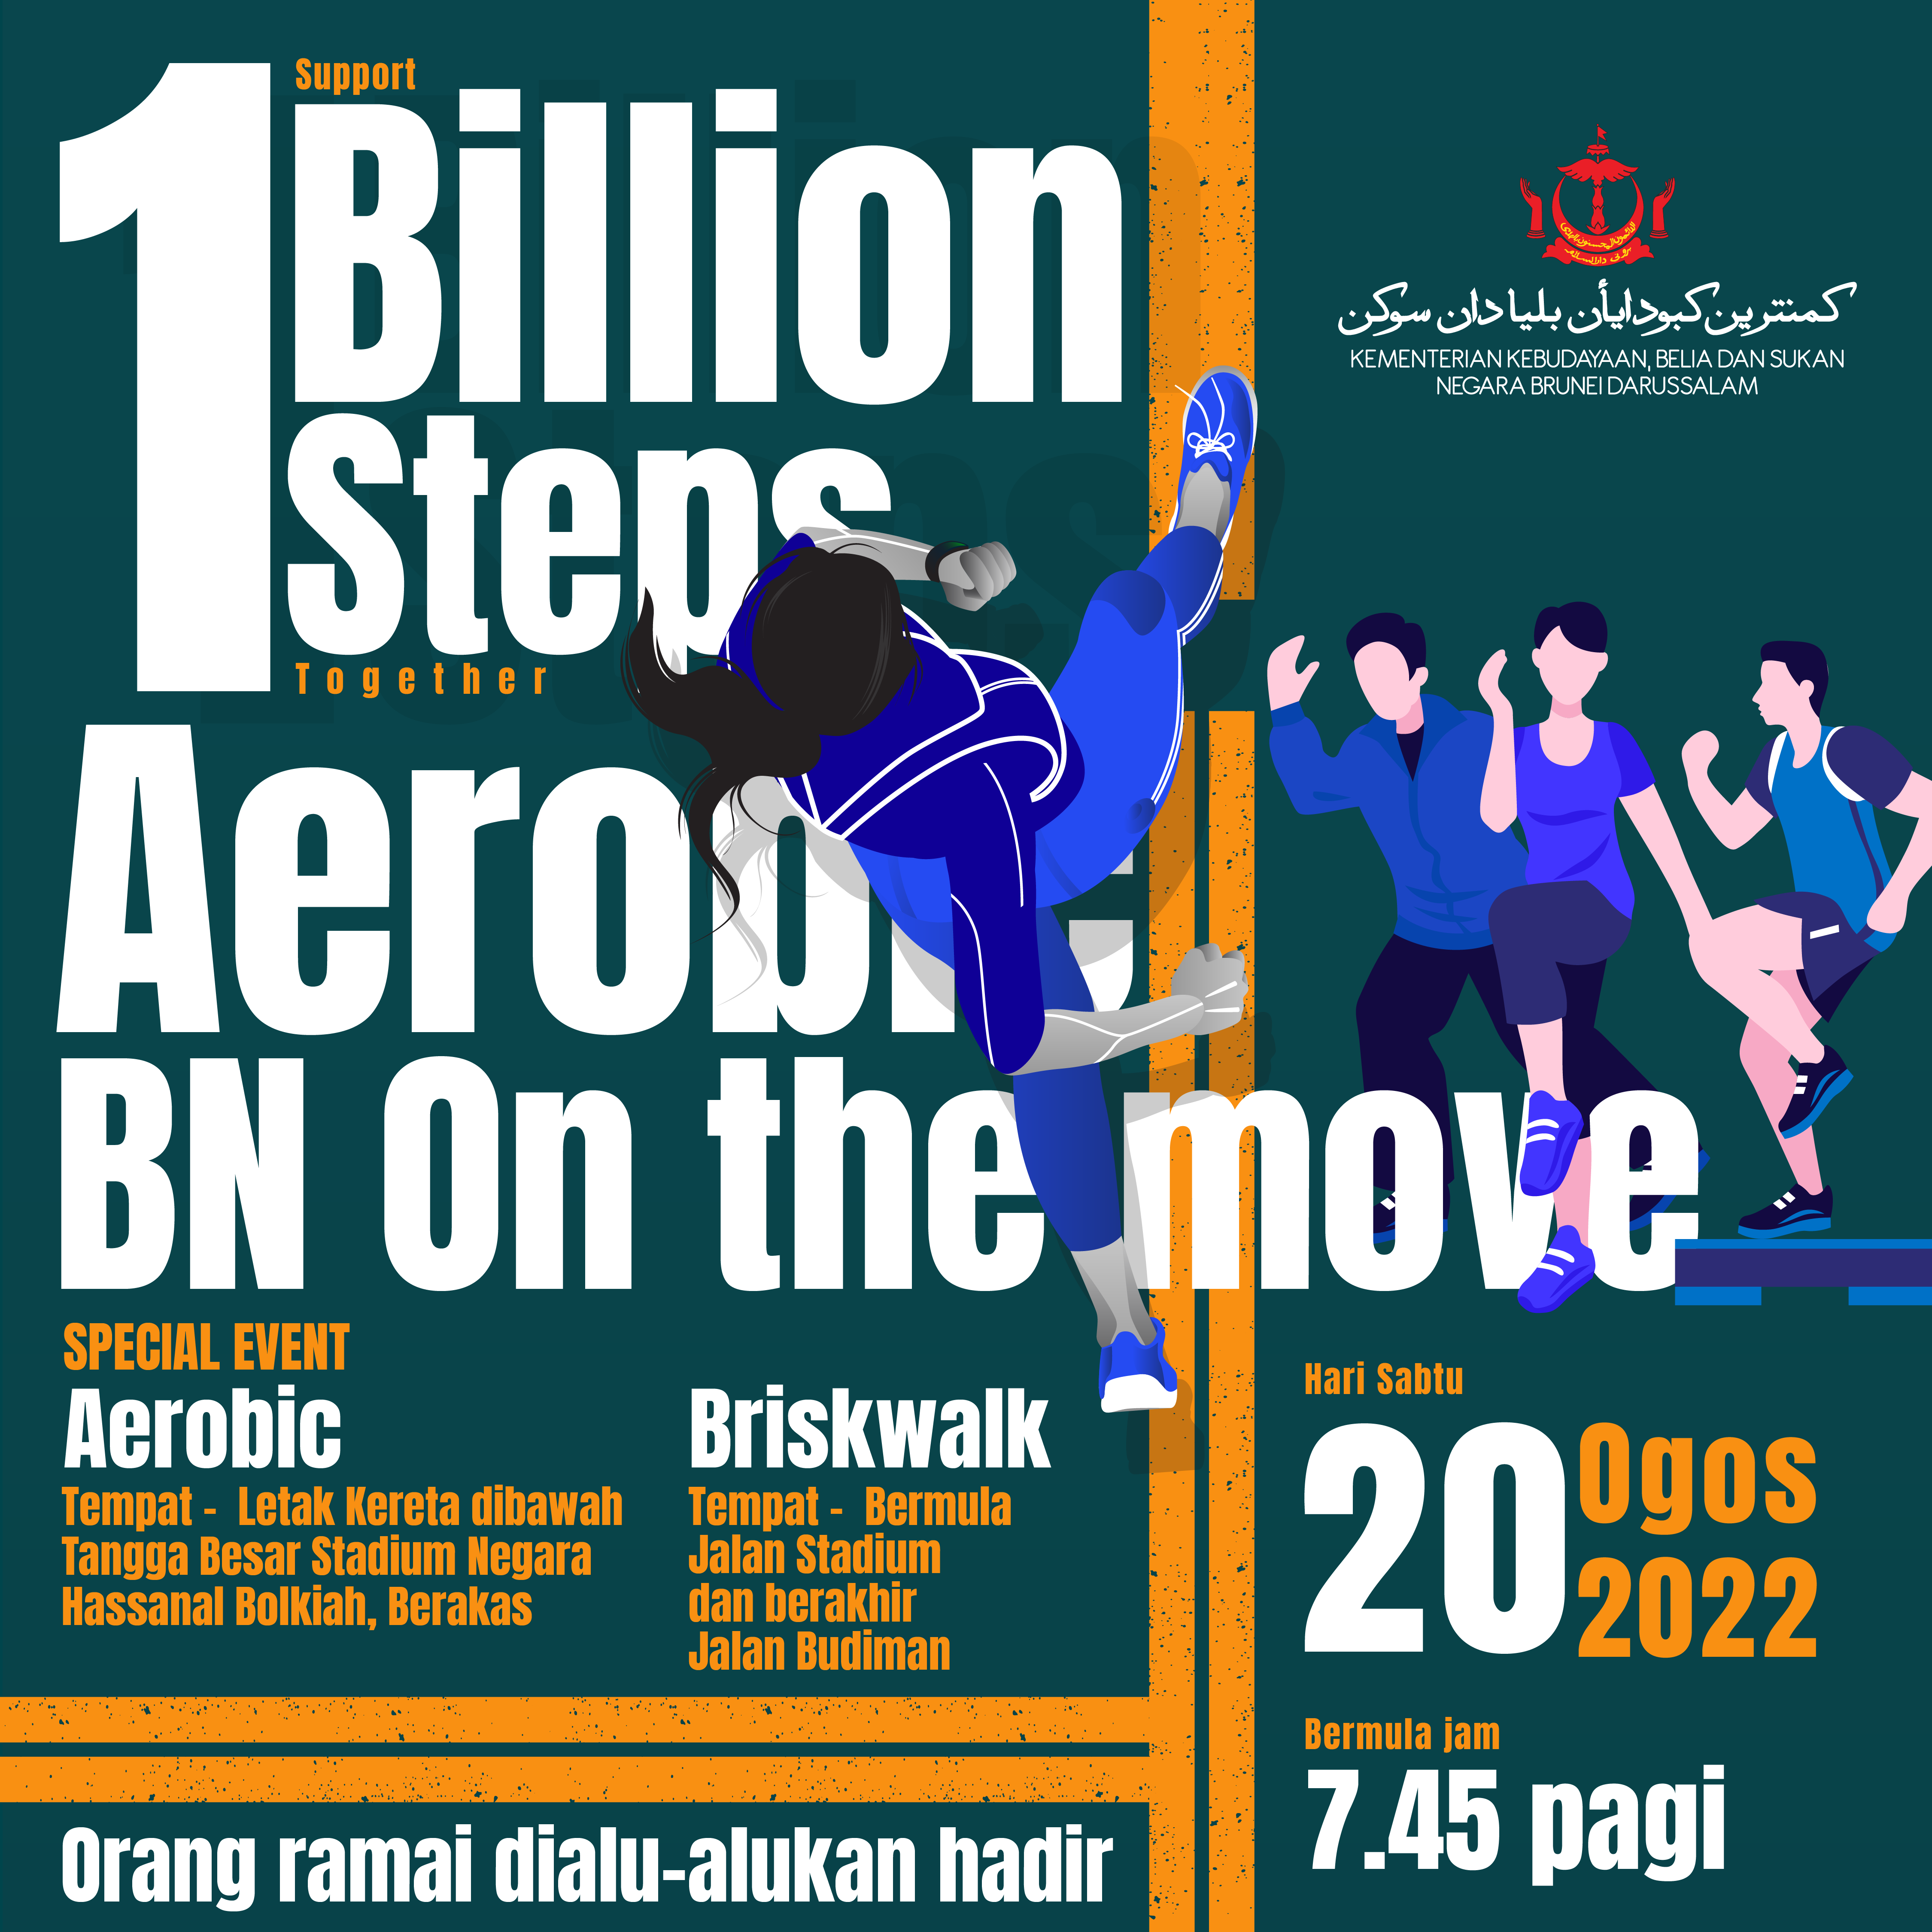 1 billion steps aerobic and walk 2022 social media-01.png